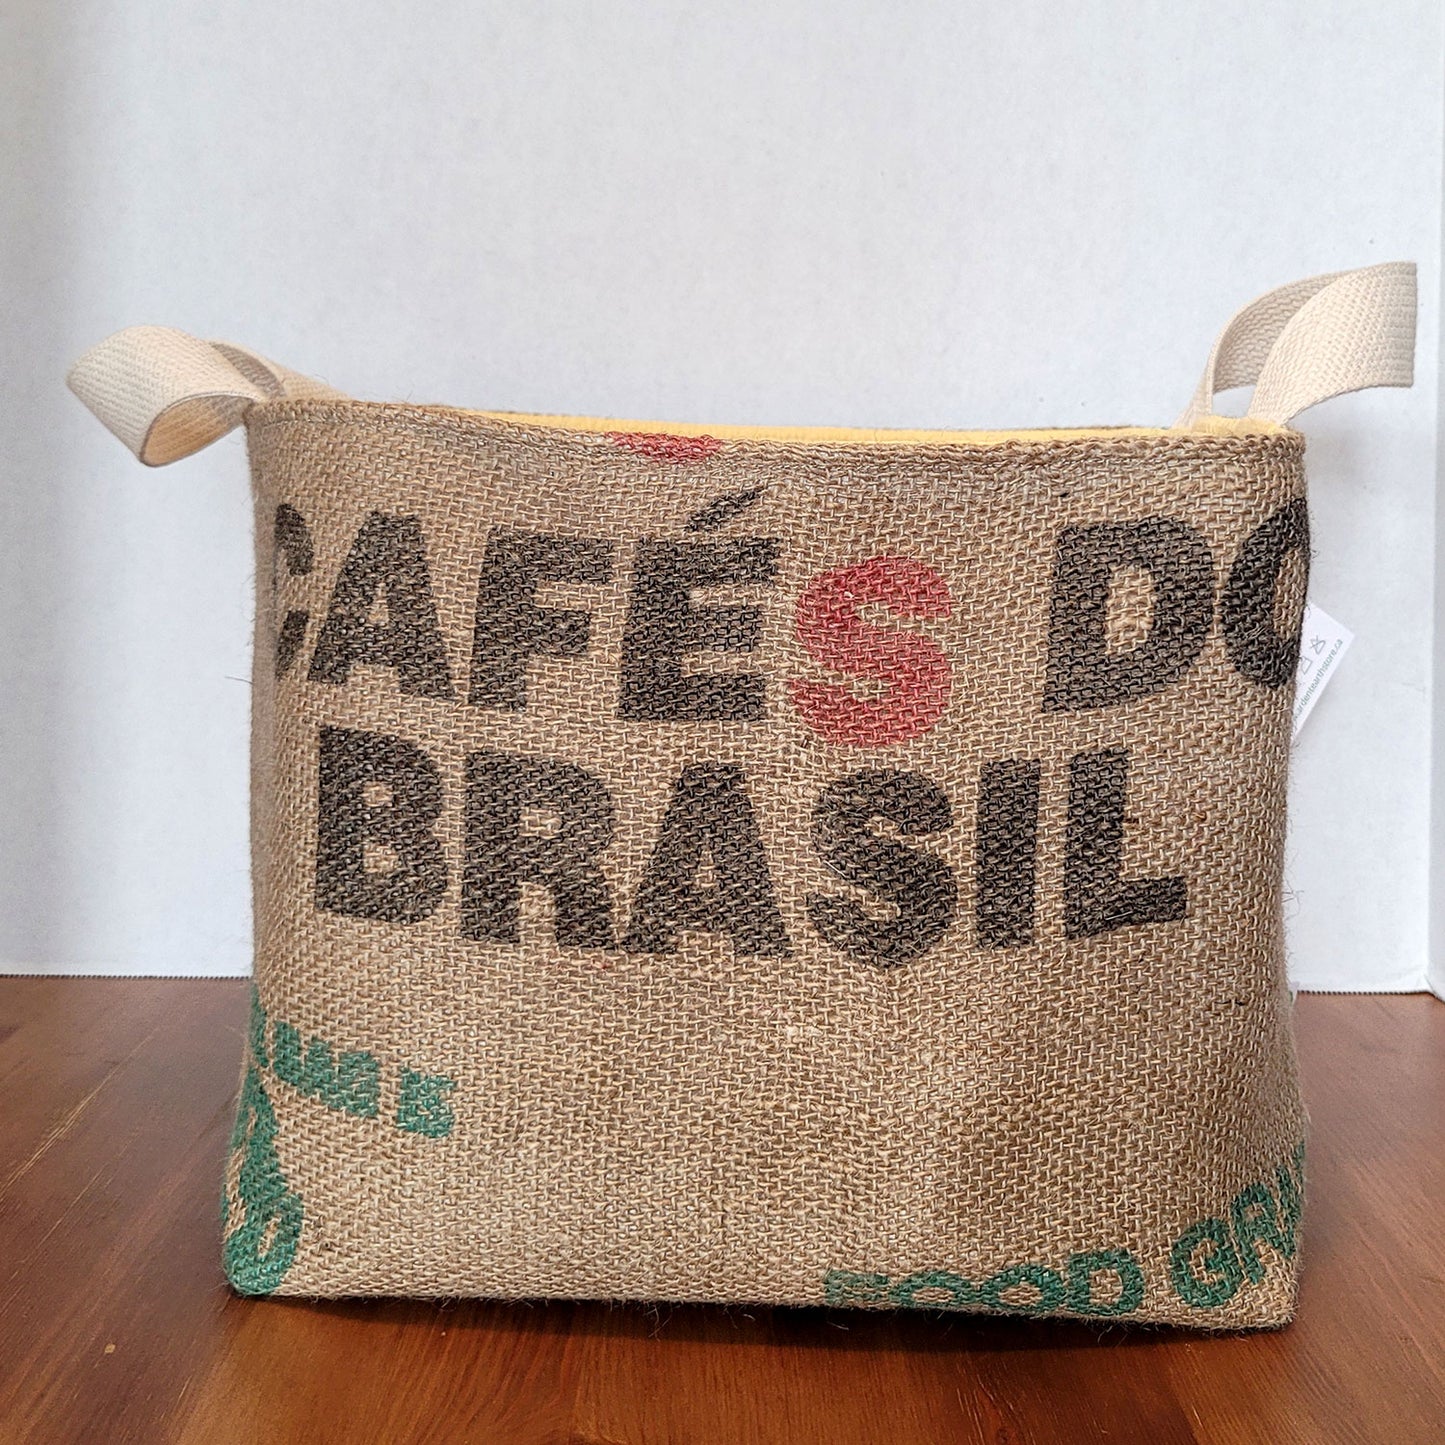 Cafés do Brasil coffee sack basket